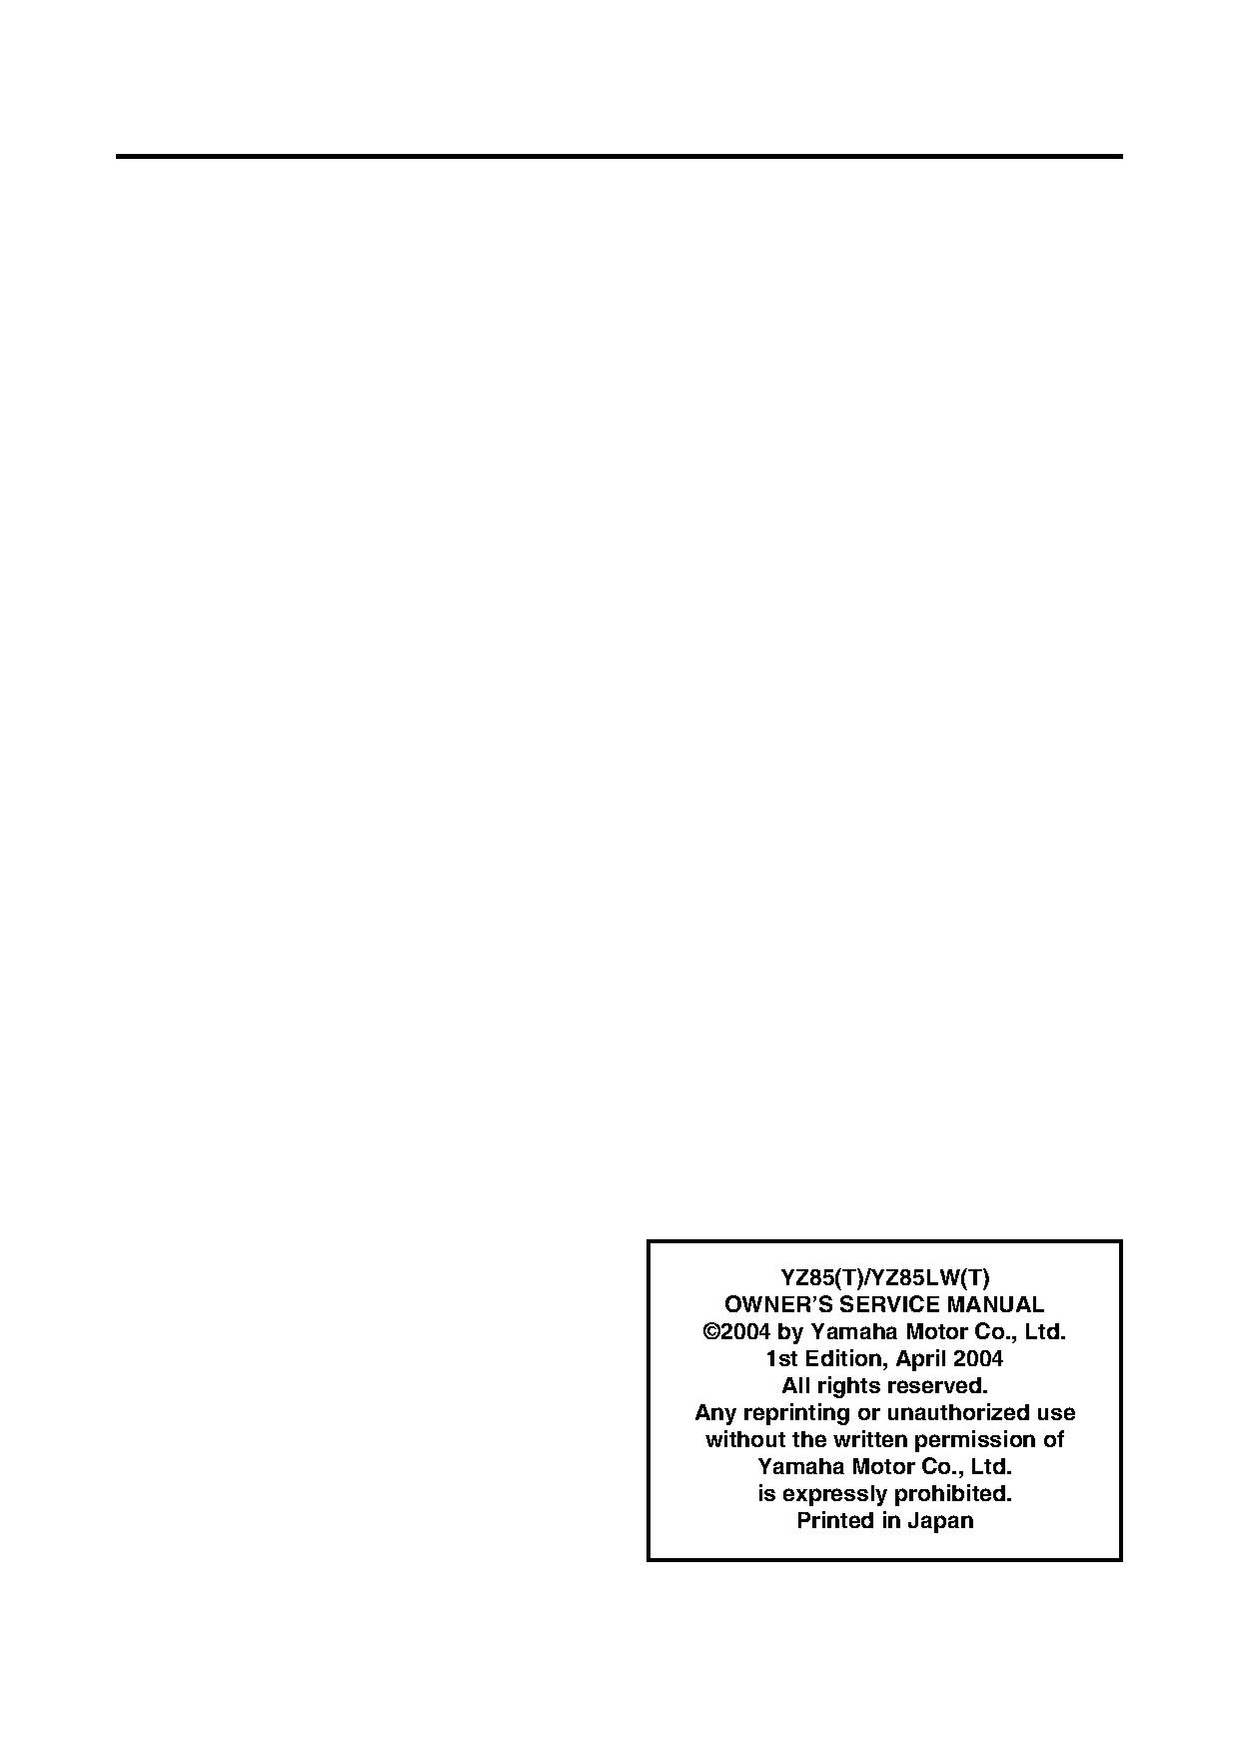 File:2005 Yamaha YZ85 Owners Service Manual.pdf